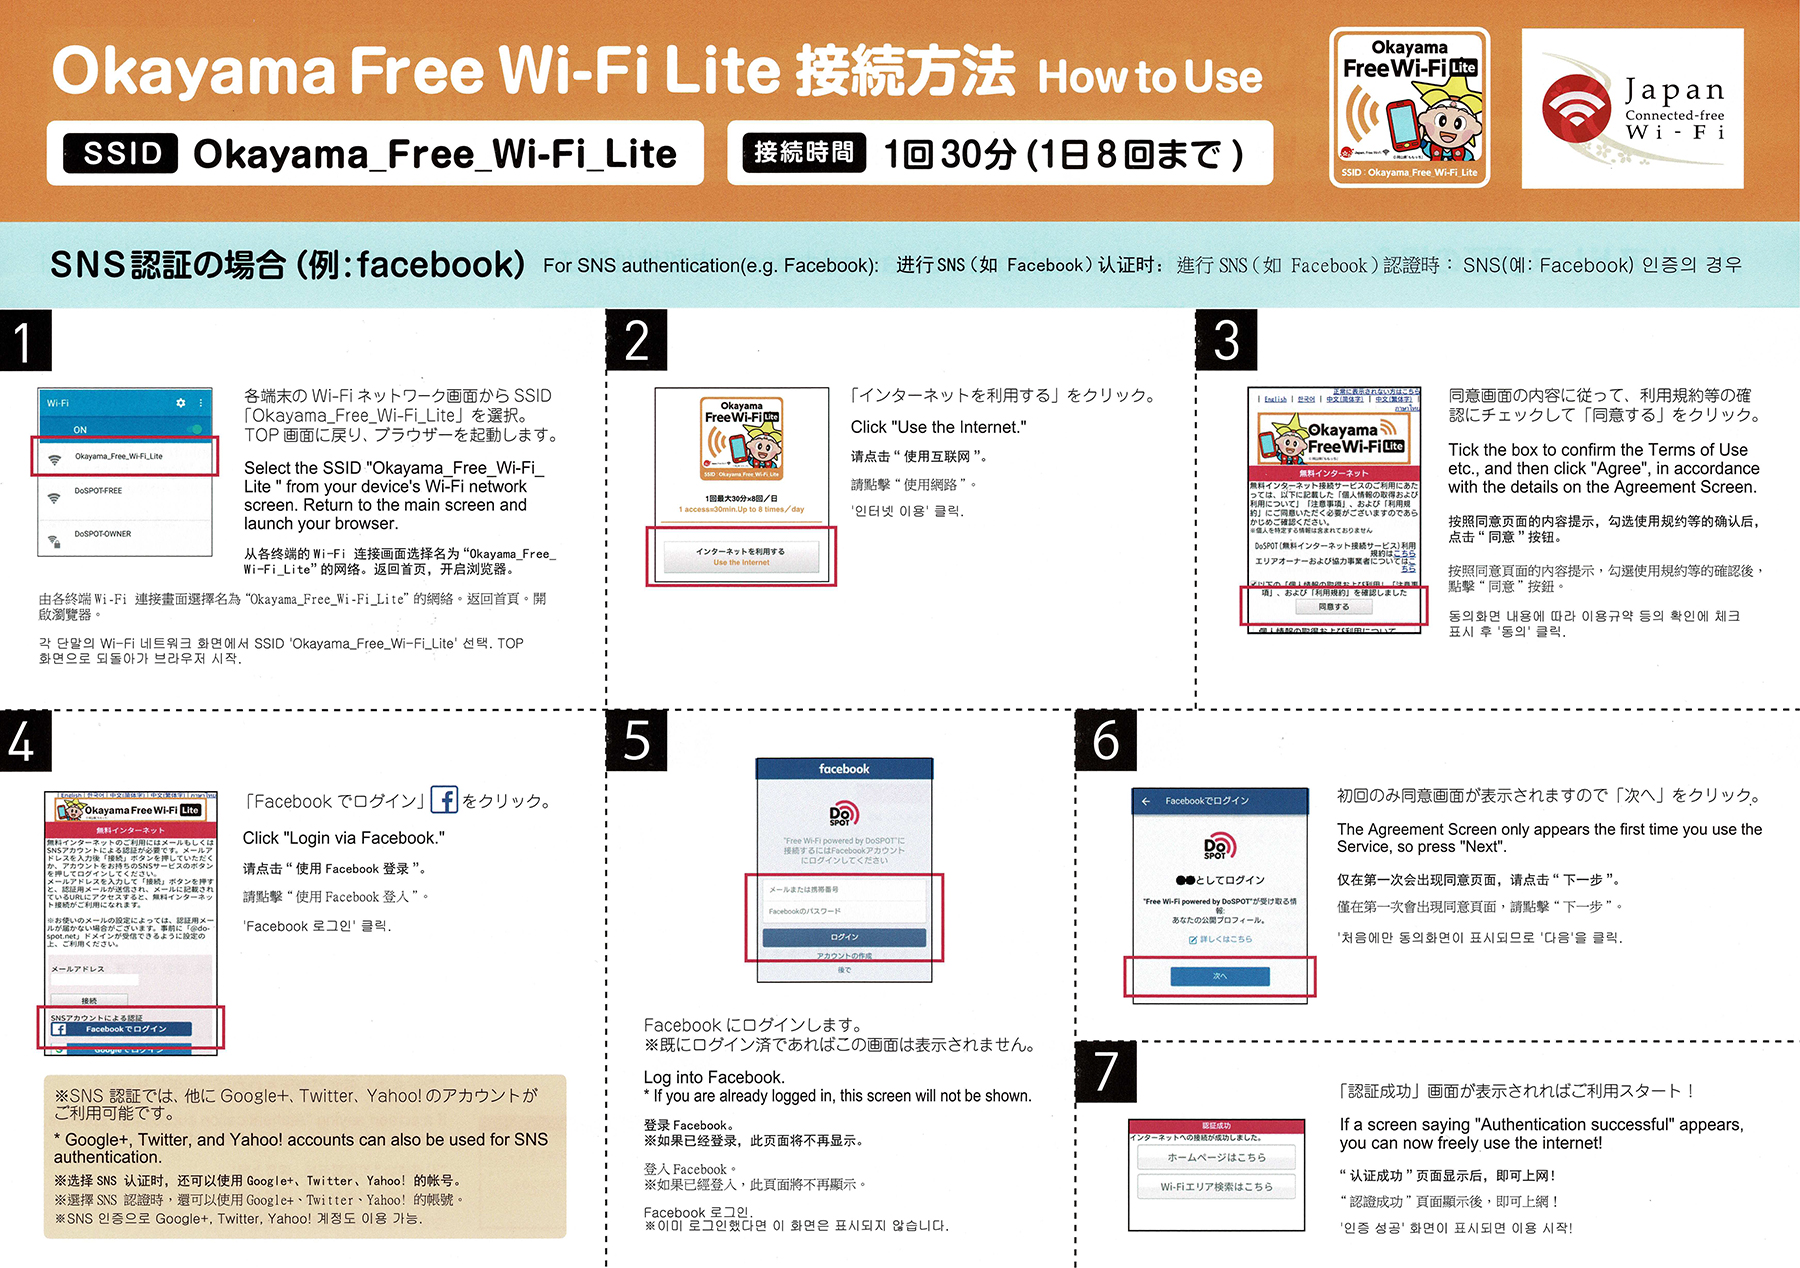 Okayama Free Wi-Fi Lite SNS認証の場合